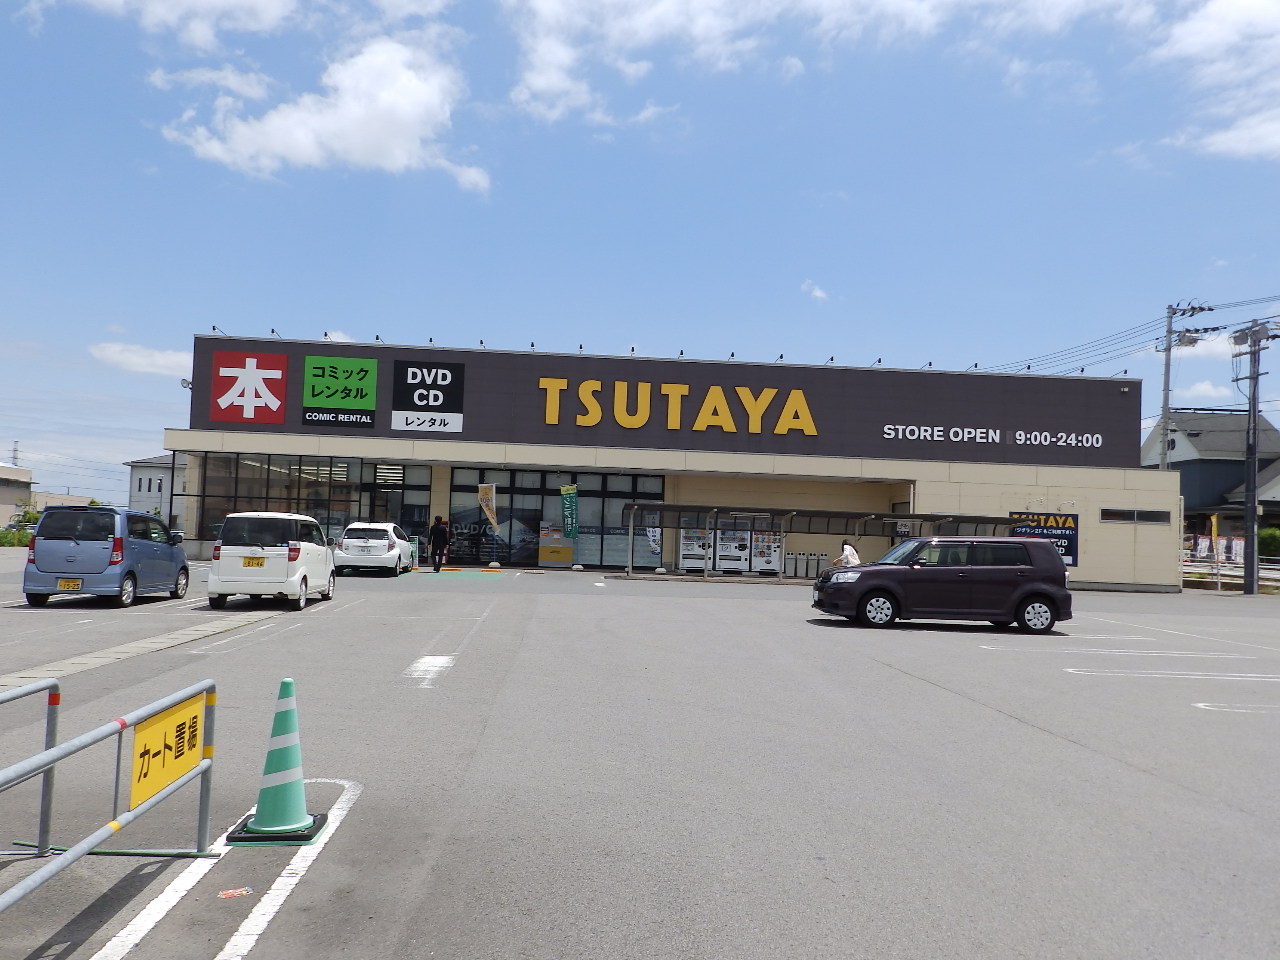 Rental video. TSUTAYA Ishii shop 2643m up (video rental)